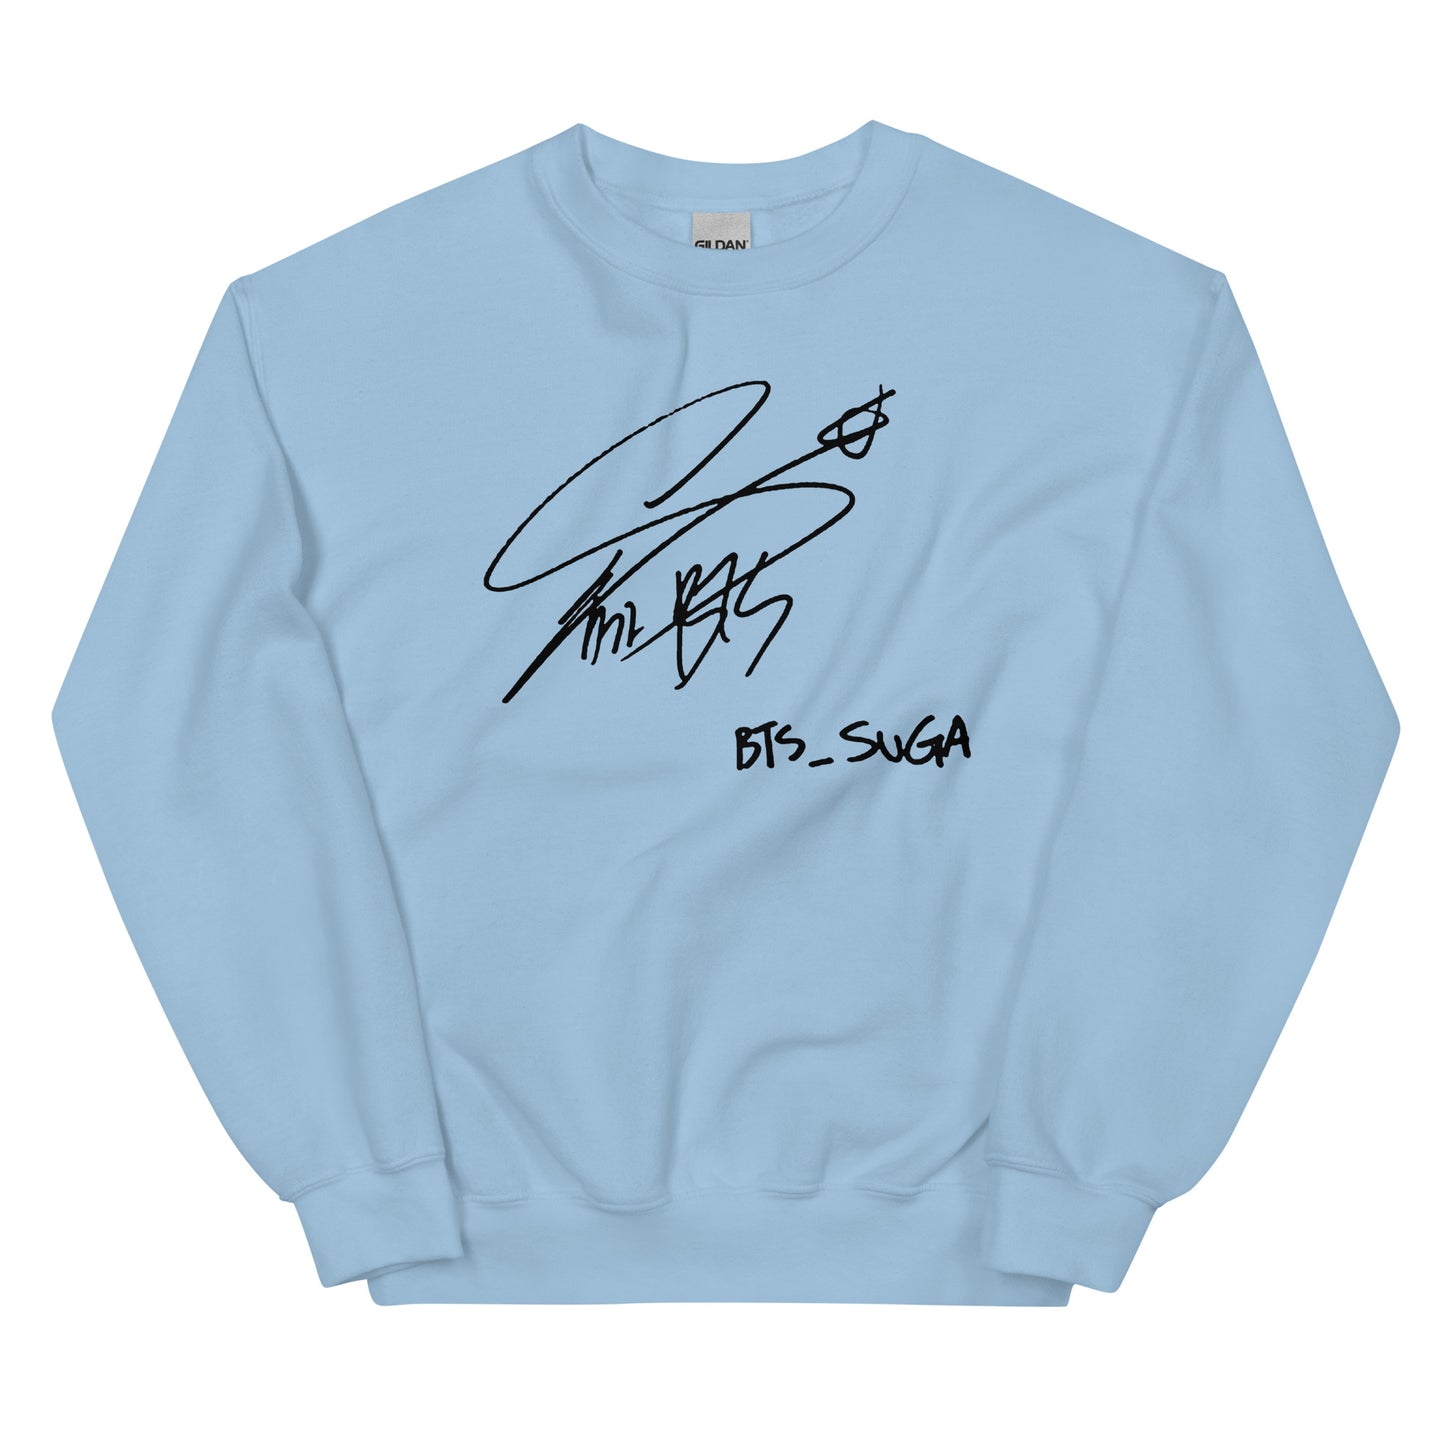 BTS Suga, Min Yoon-gi Signature Unisex Sweatshirt